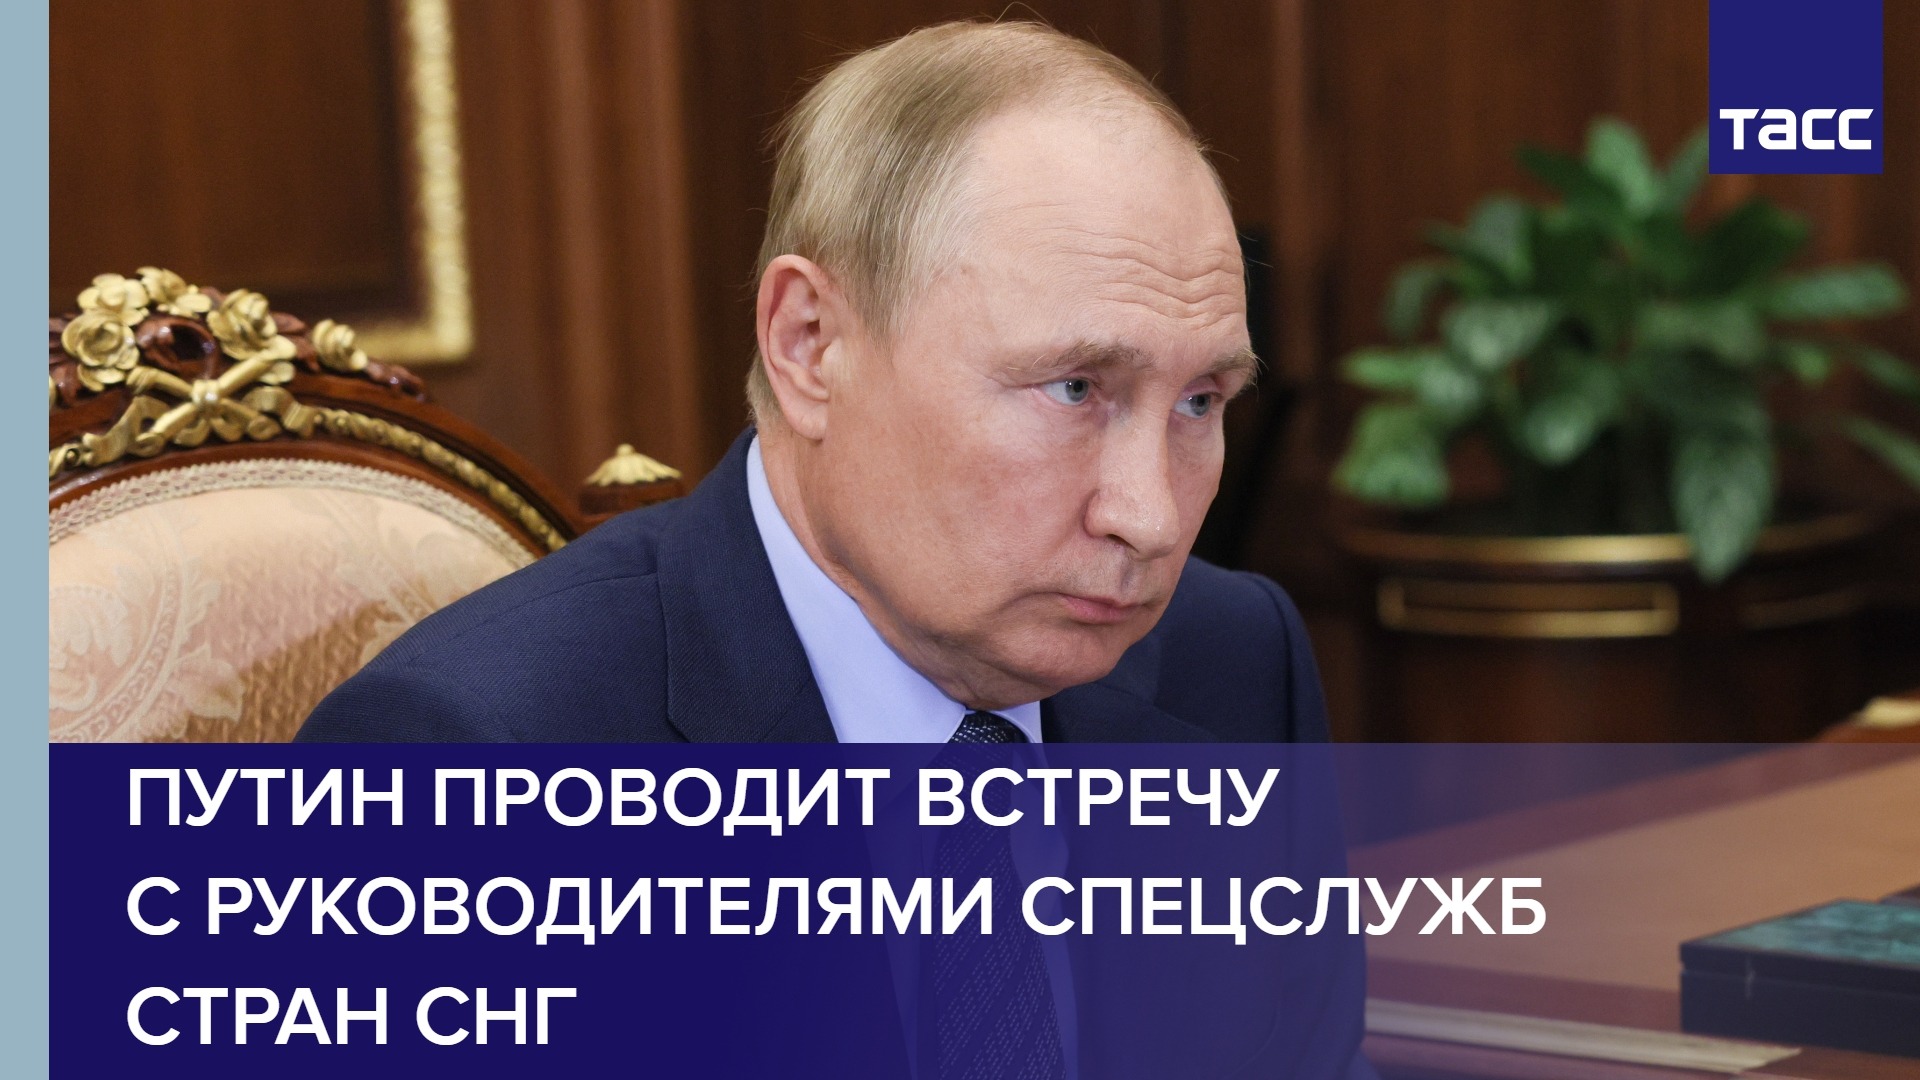 Путин проводит встречу с руководителями спецслужб стран СНГ